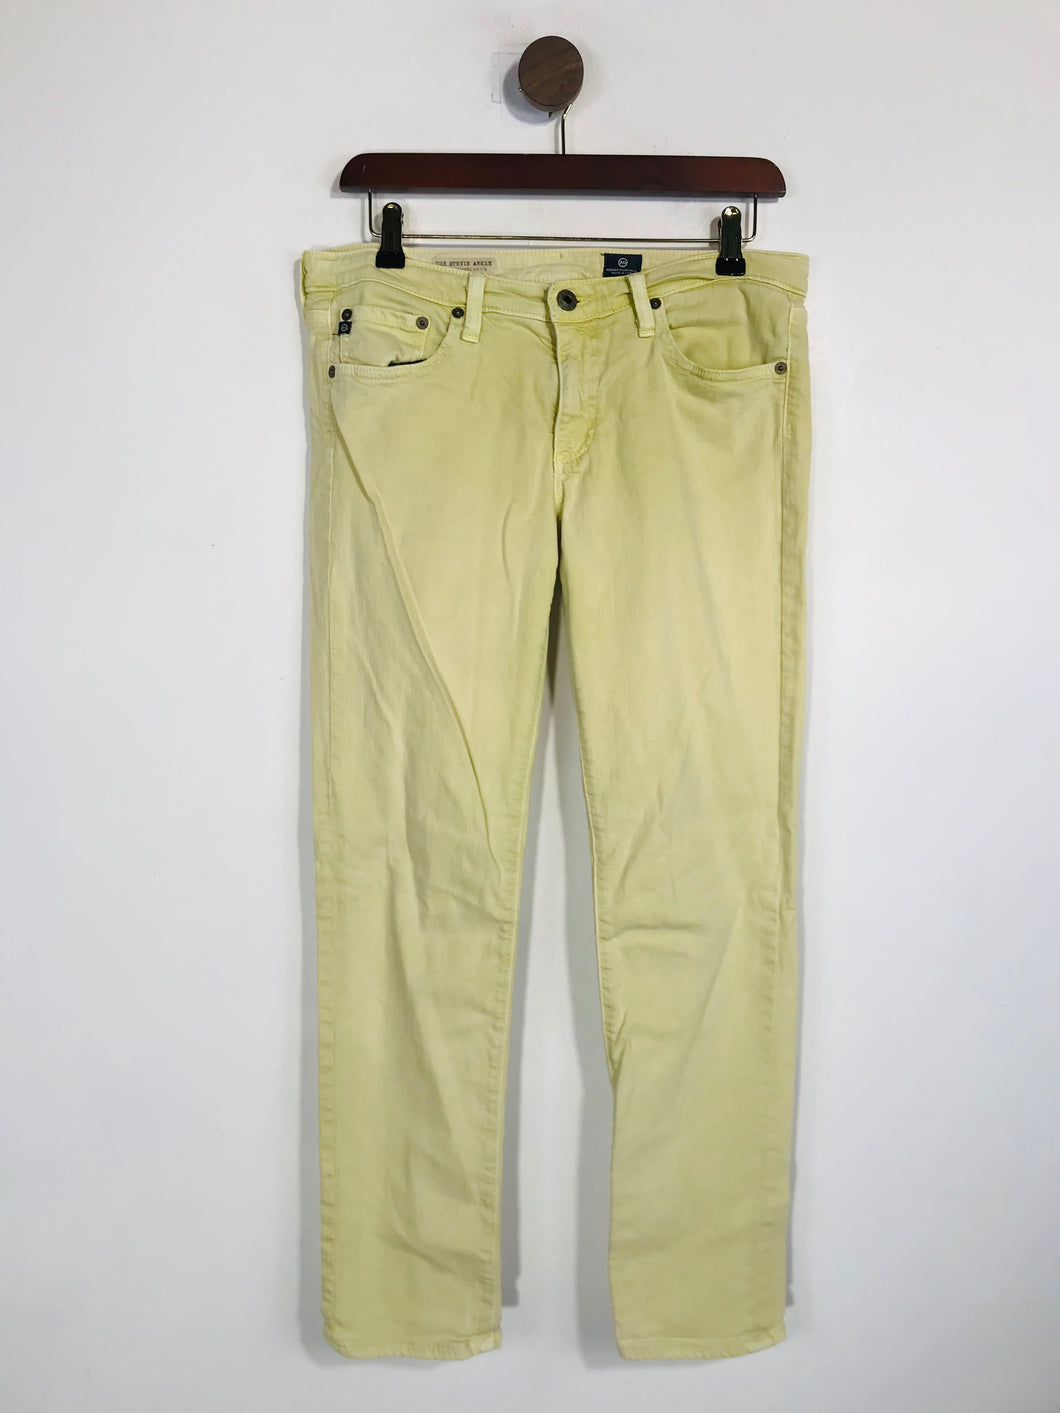 Adriano Goldschmied Women's Skinny Jeans | 29R | Yellow